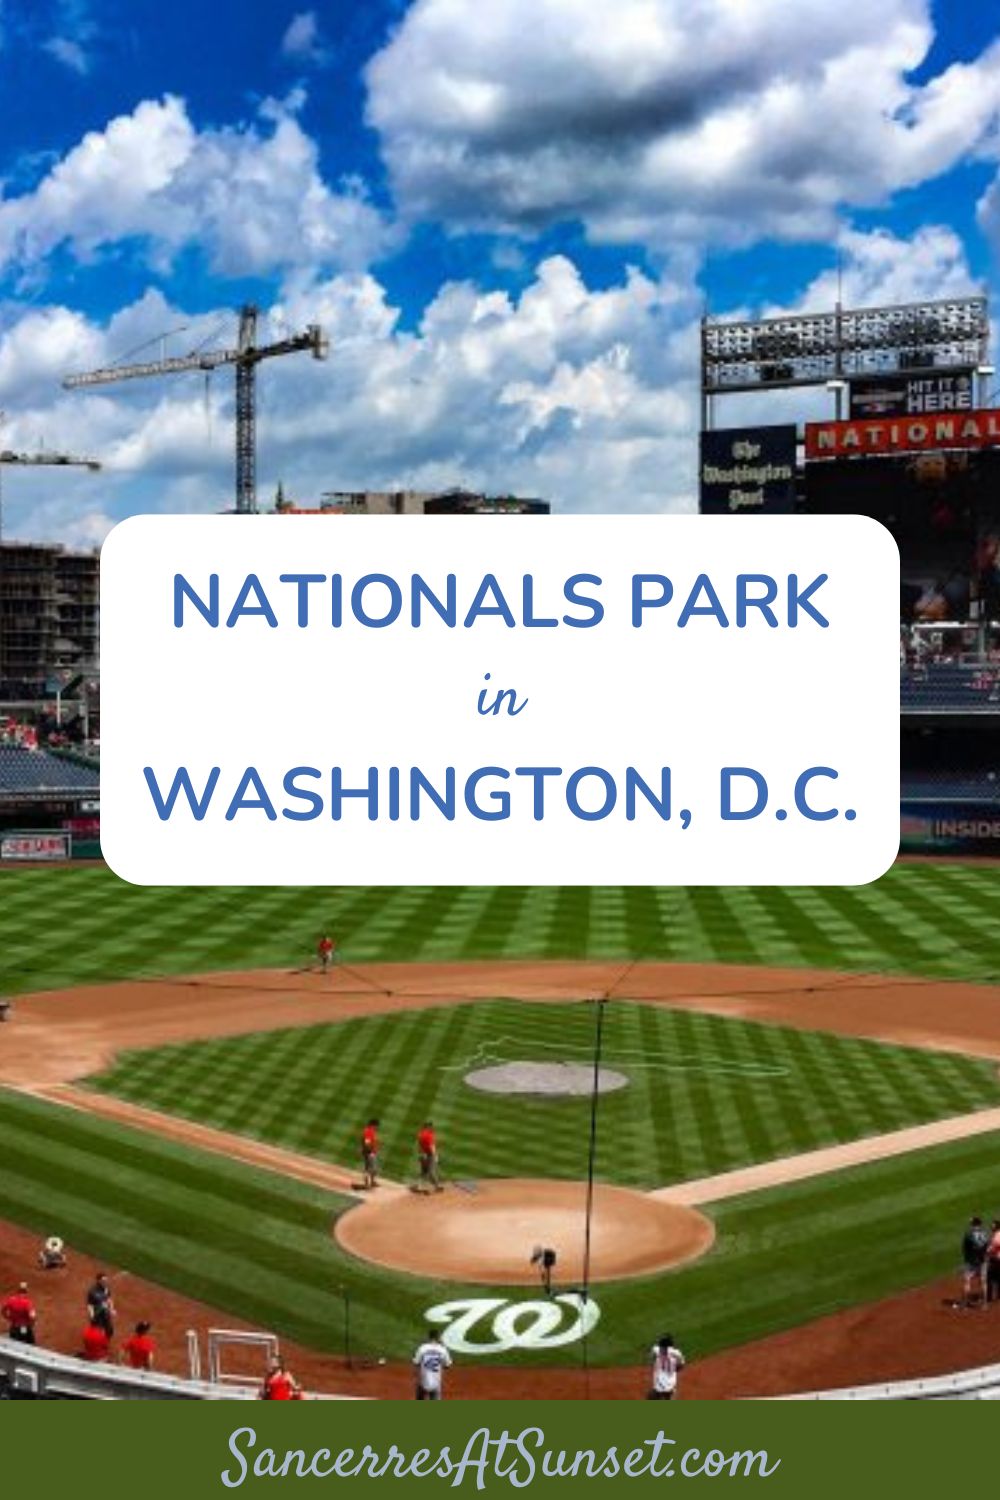 Nationals Park in Washington, D.C.